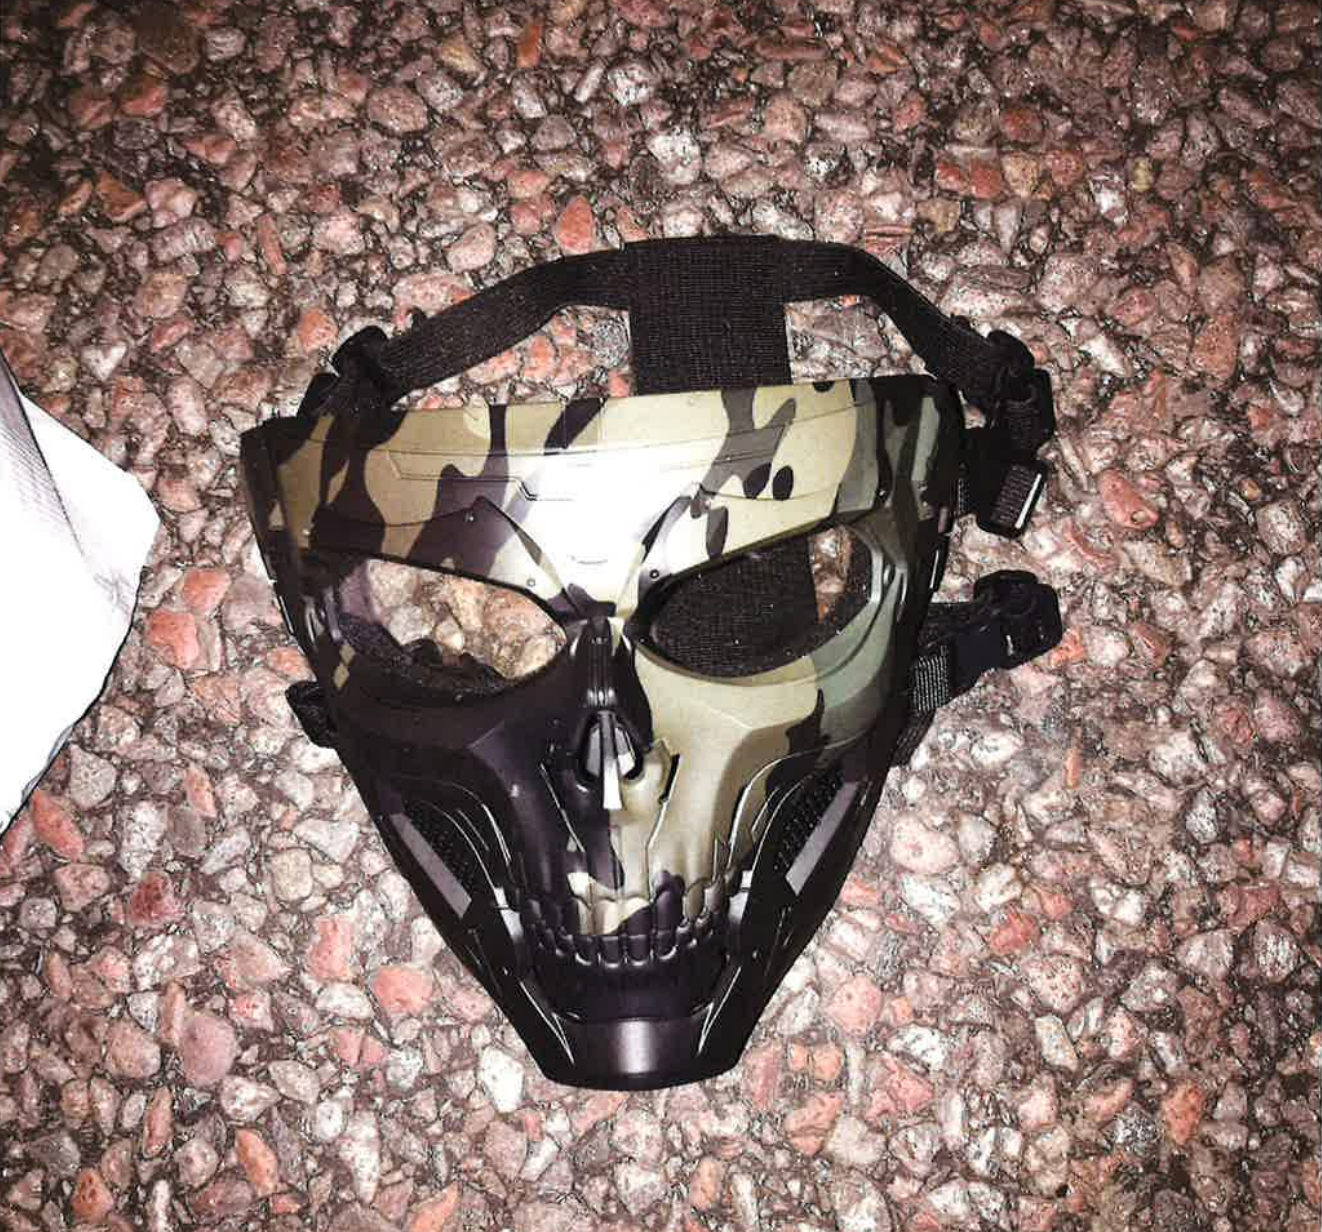 Mask som hittades i en påse i bilen. 